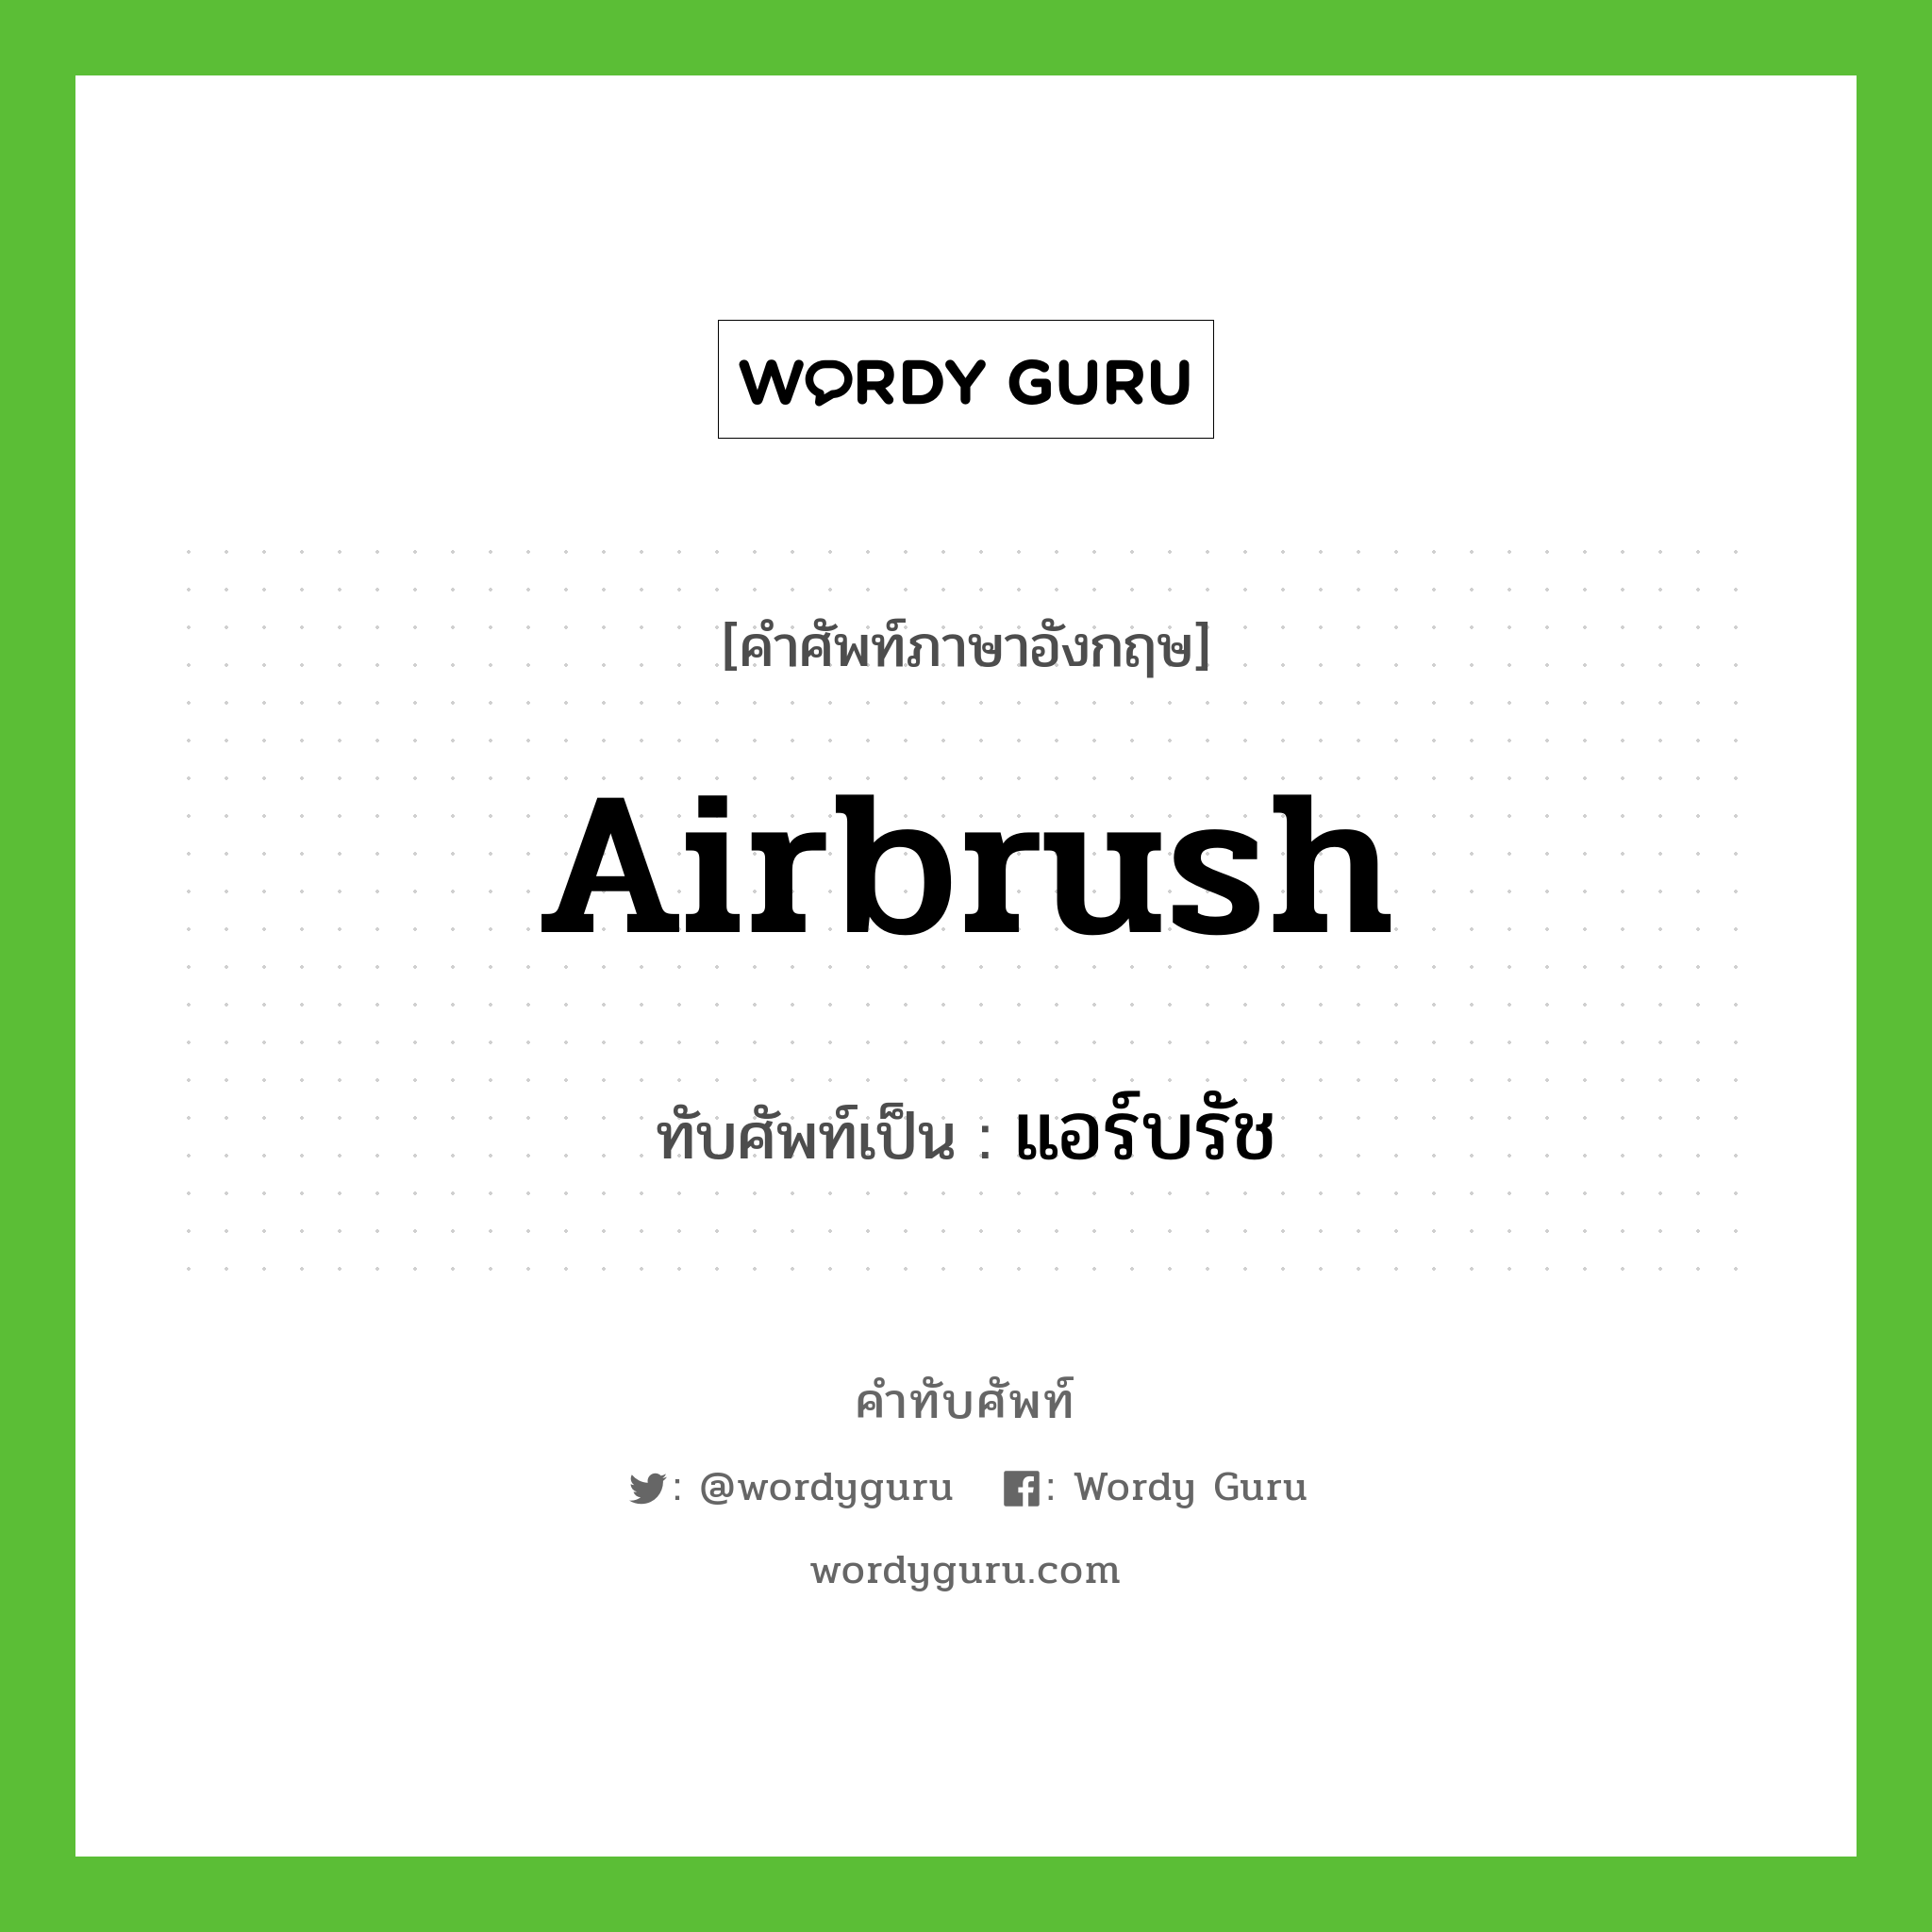 airbrush เขียนเป็นคำไทยว่าอะไร?, คำศัพท์ภาษาอังกฤษ airbrush ทับศัพท์เป็น แอร์บรัช